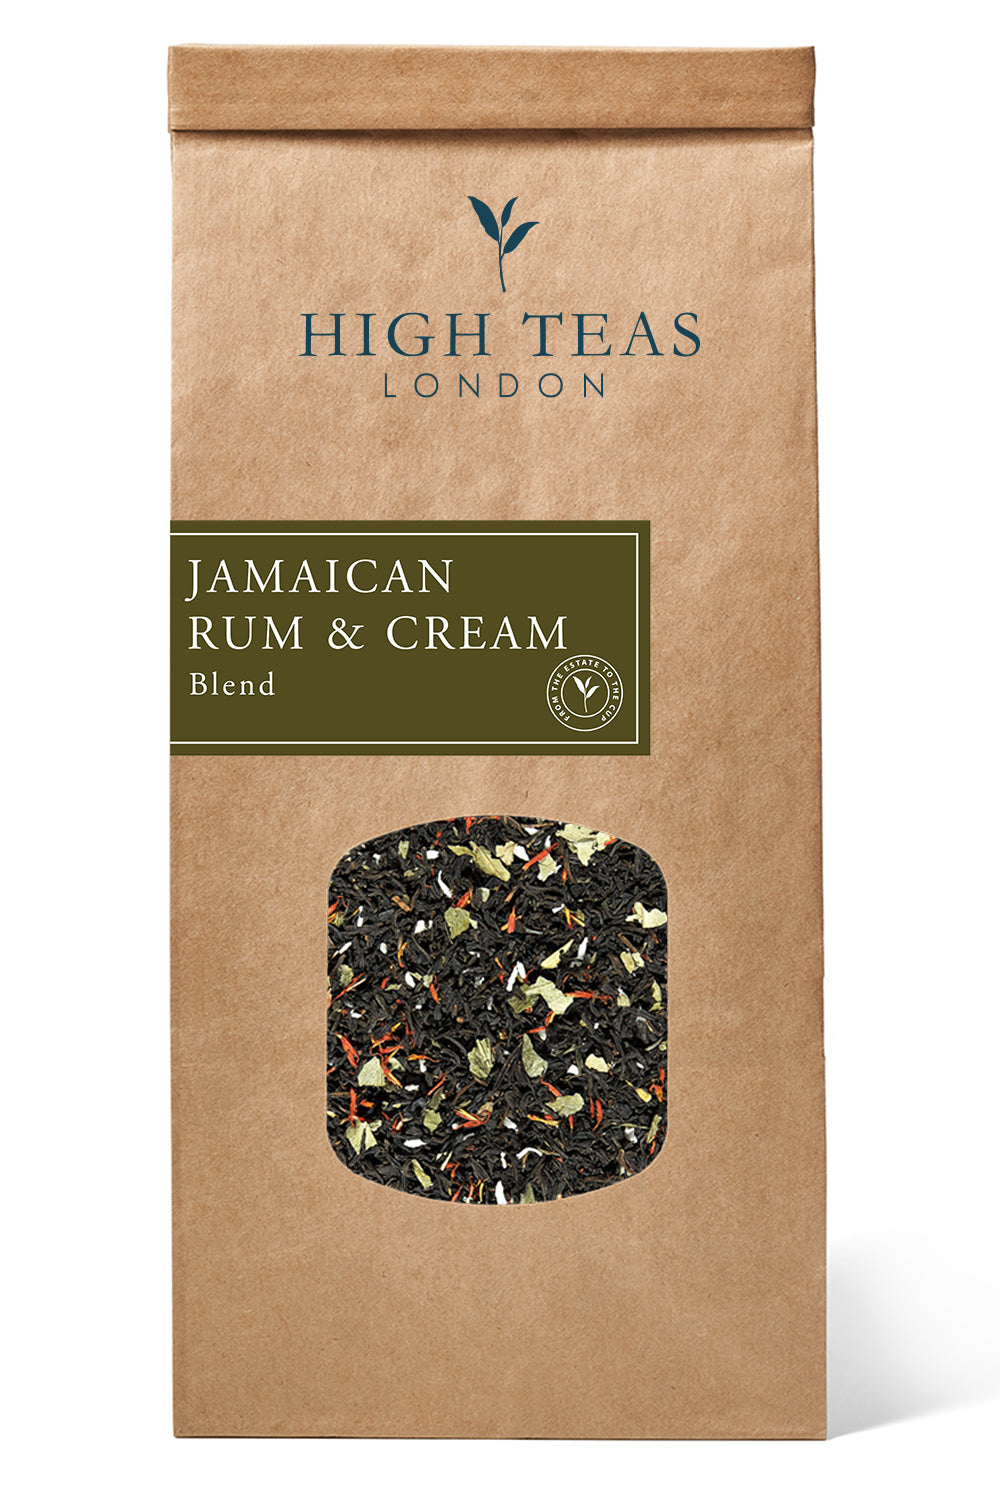 Jamaican Rum and Cream-250g-Loose Leaf Tea-High Teas